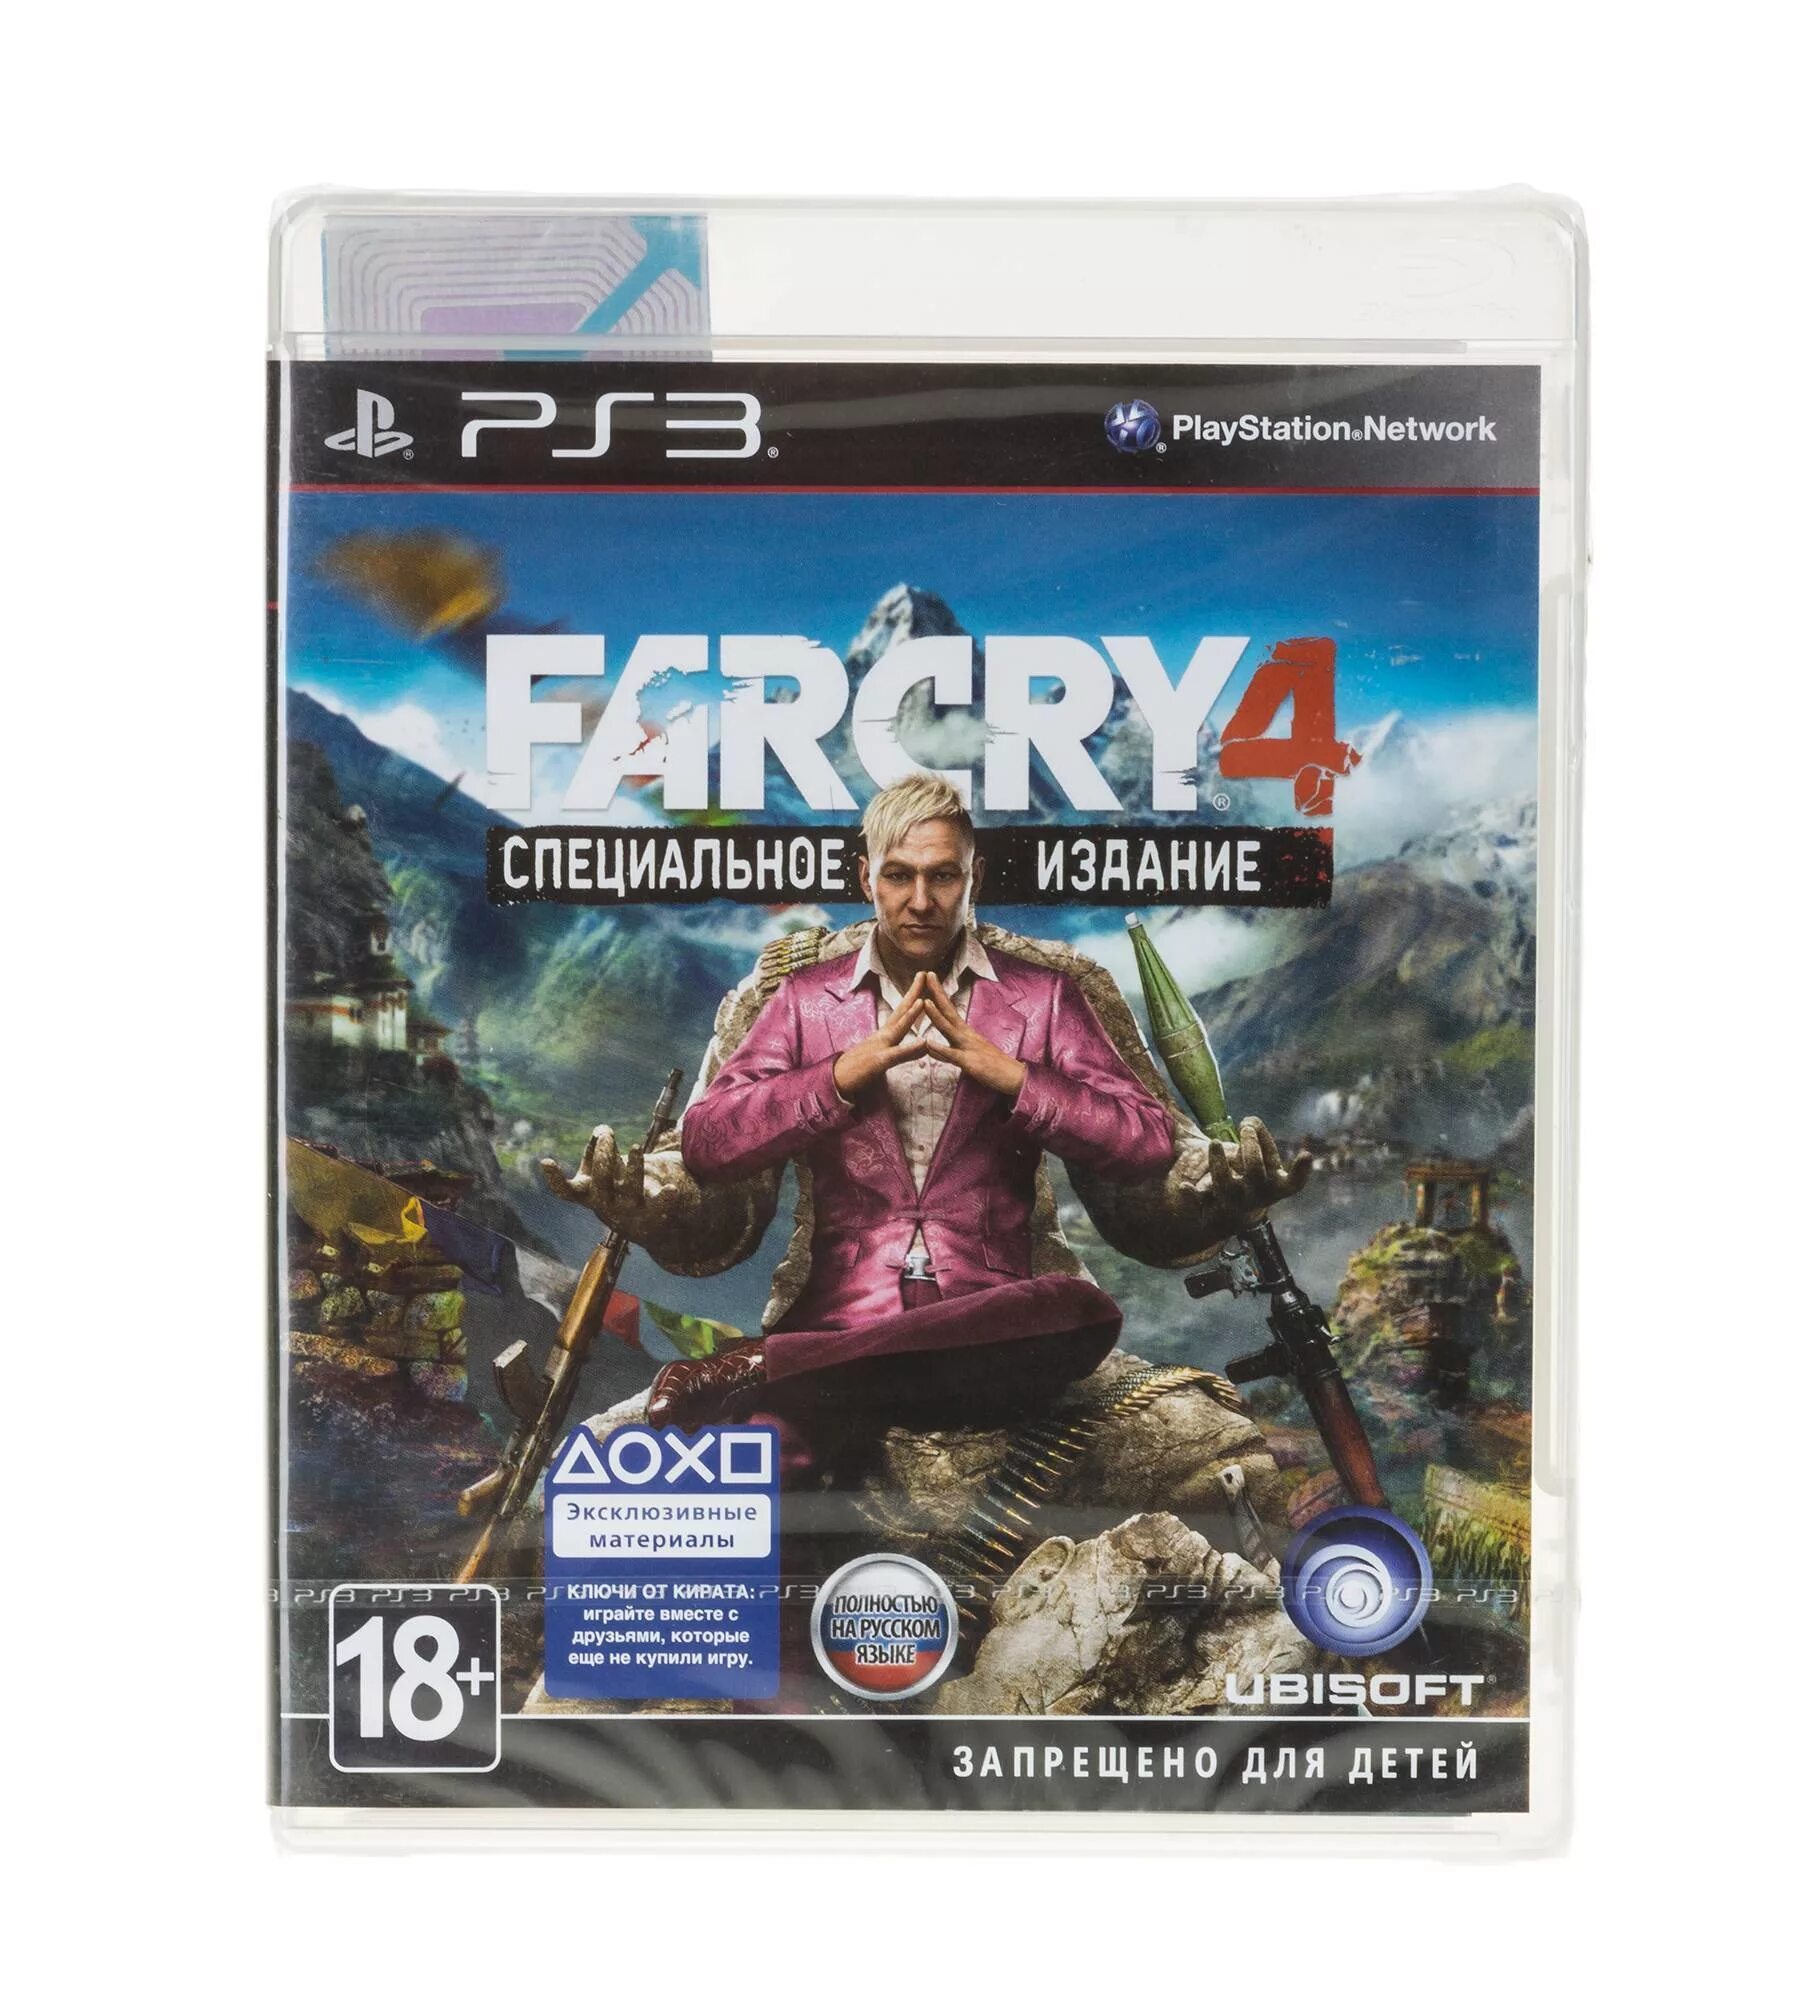 Диск пс4 far Cry 4. Far Cry 4 специальное издание ps3. Far Cry 3 [ps3, русская версия]ps3. Far Cry 6 на пс3 диск. Диски ps3 ps4